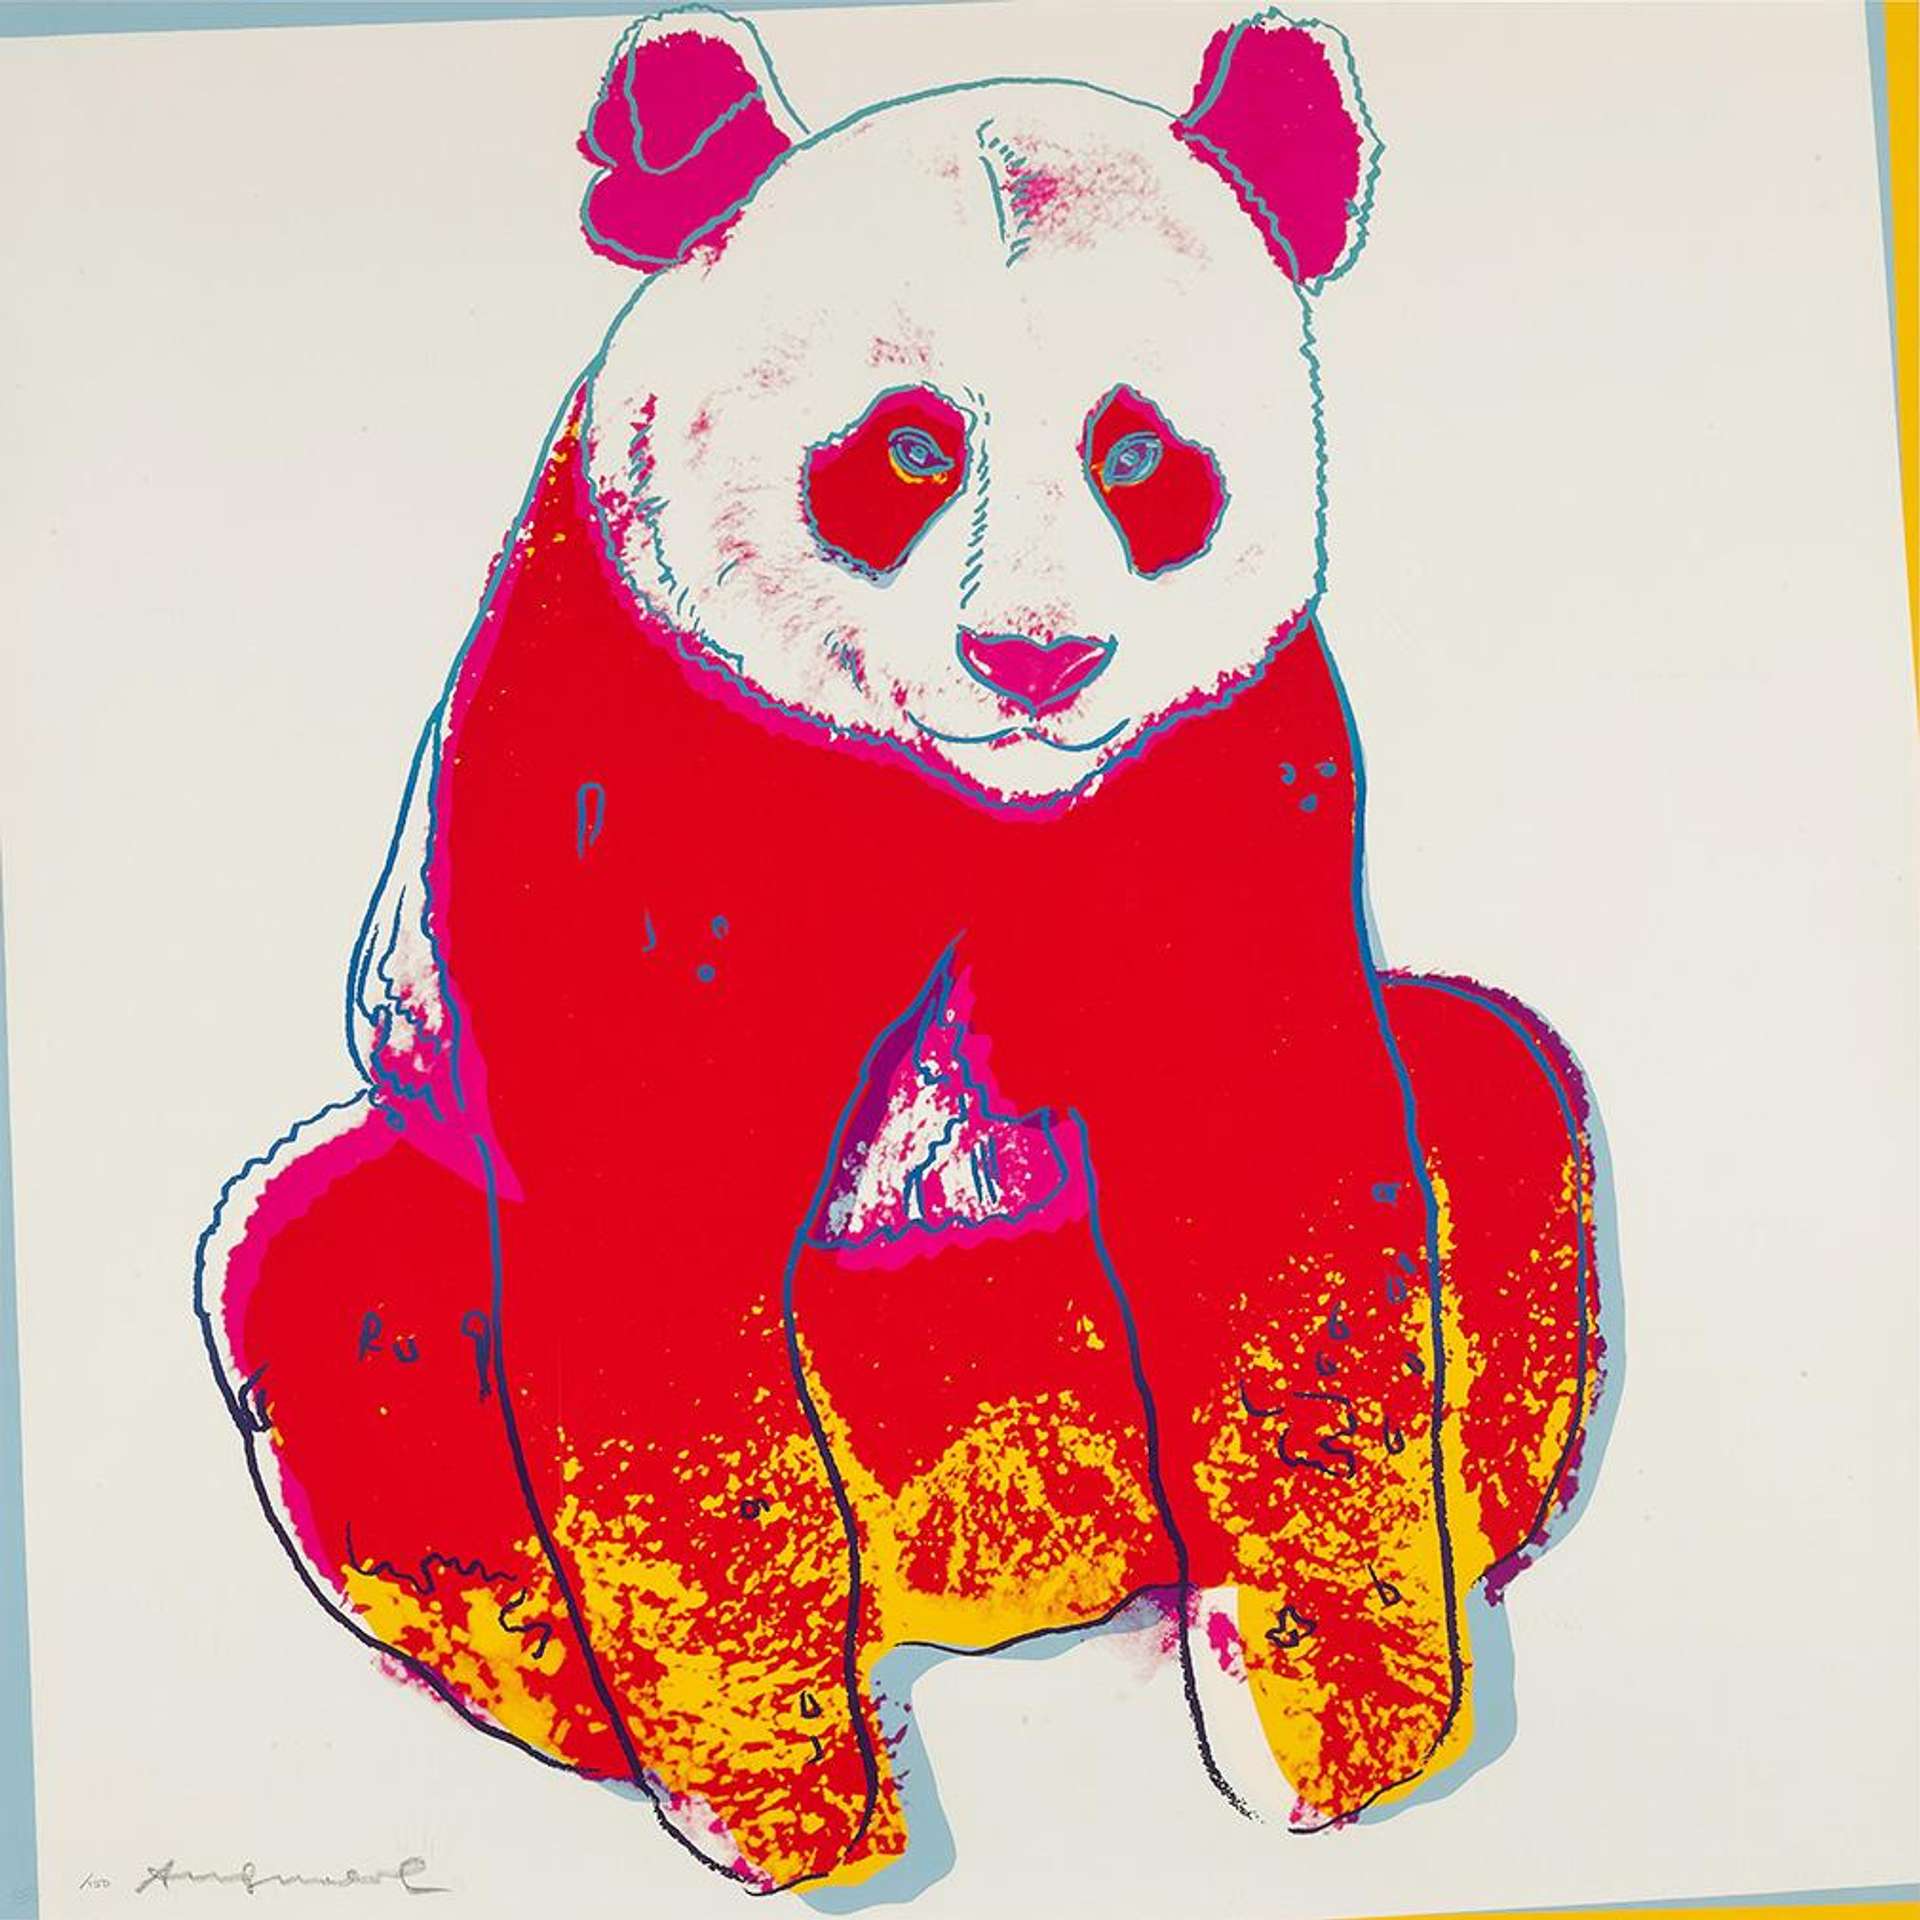 Giant Panda (F. & S. II. 295) by Andy Warhol